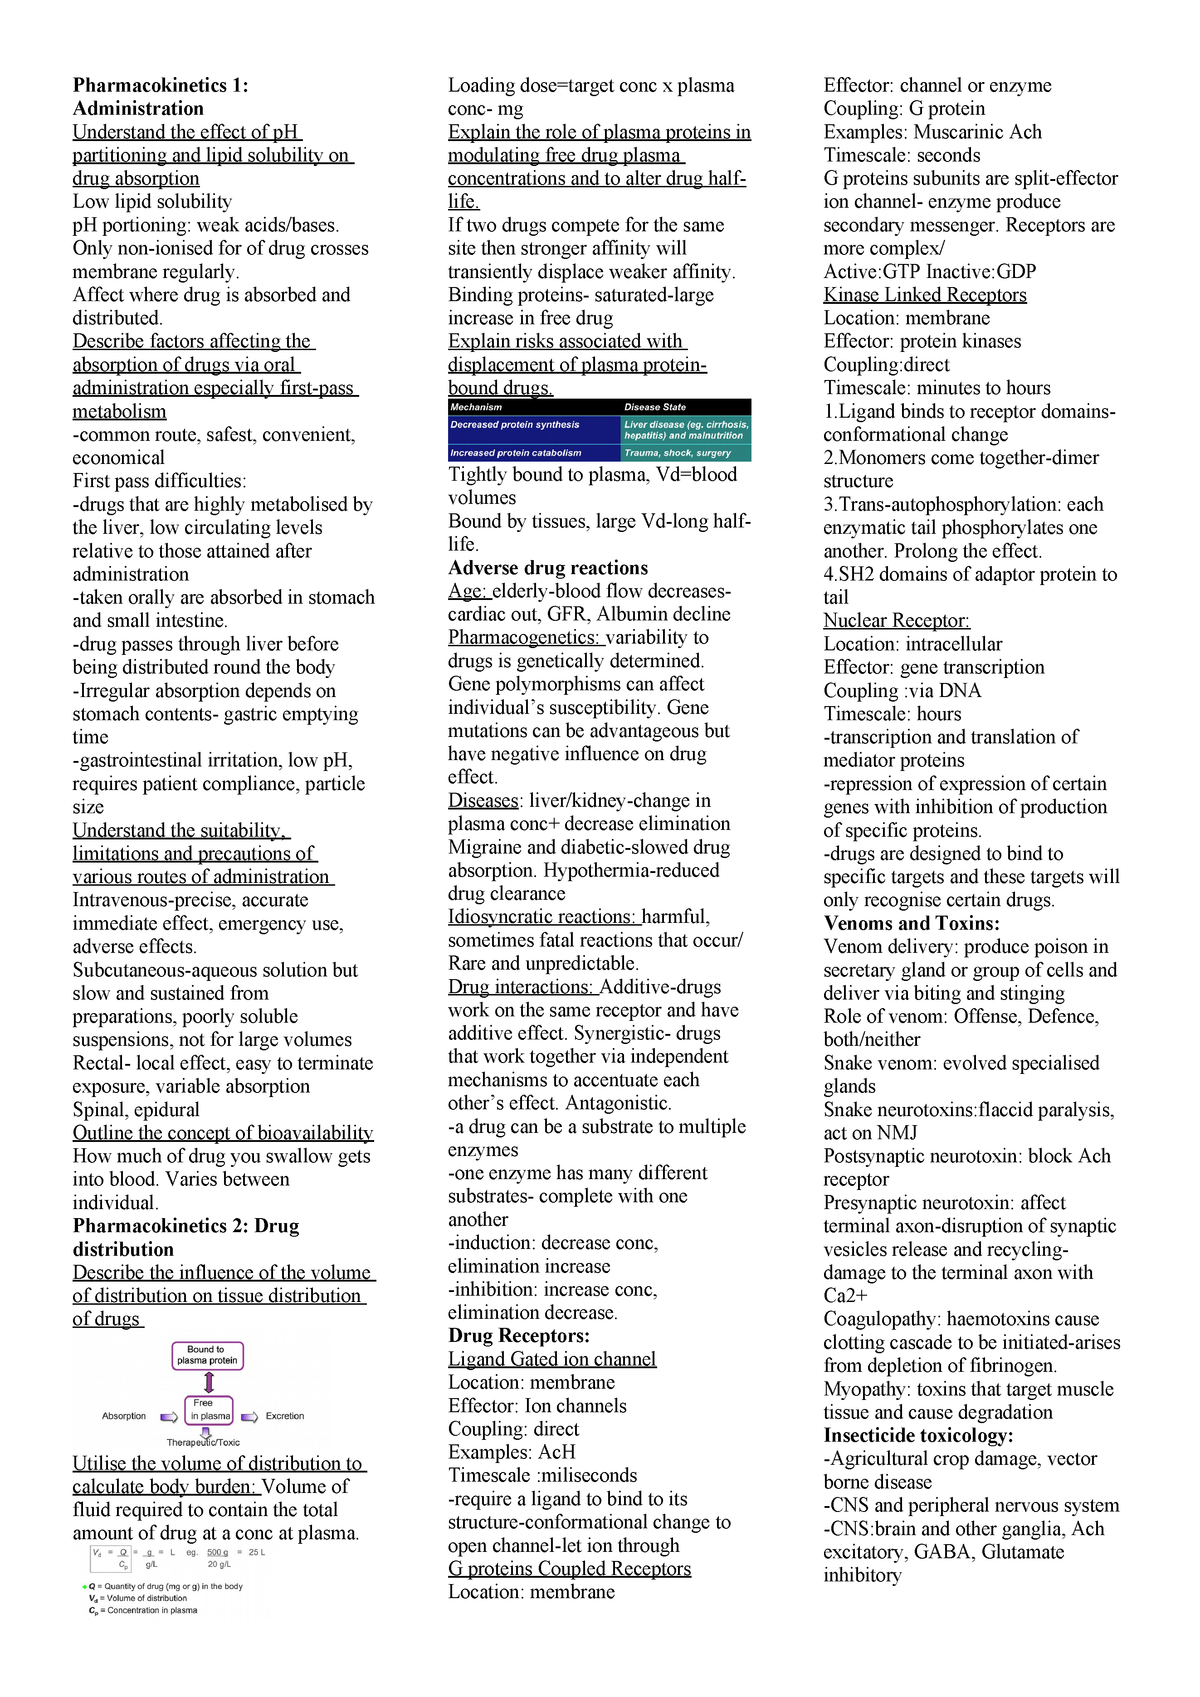 pharmacology-cheat-sheet-091707-studocu